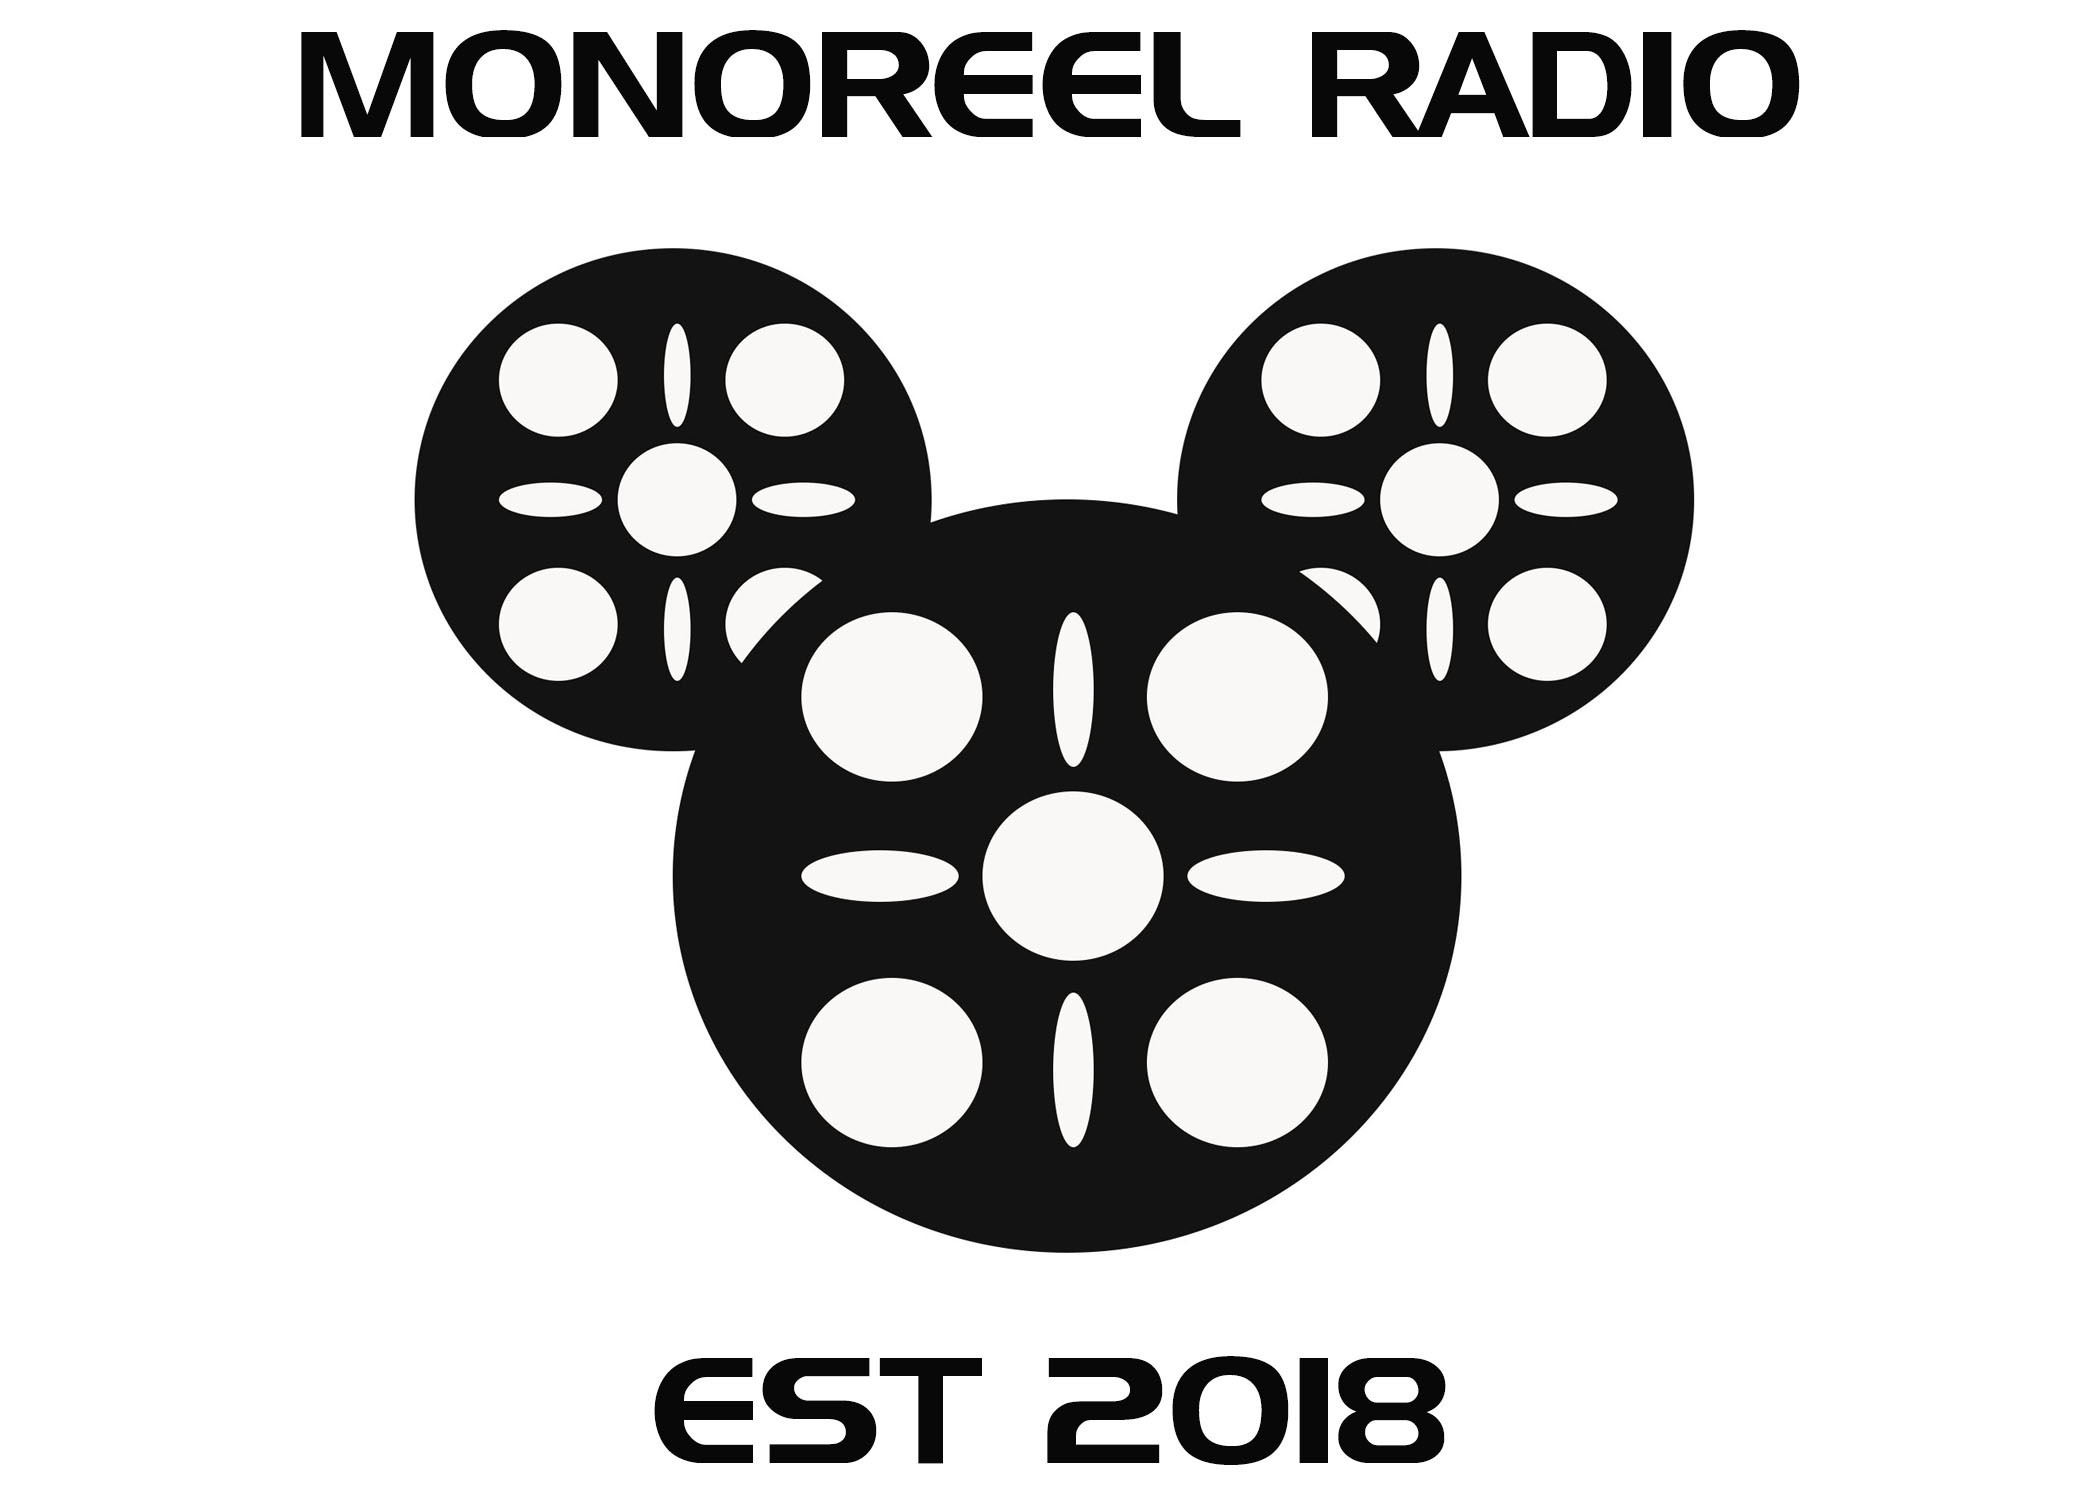 Monoreel Radio Episode 69 The Muppet Christmas Carol